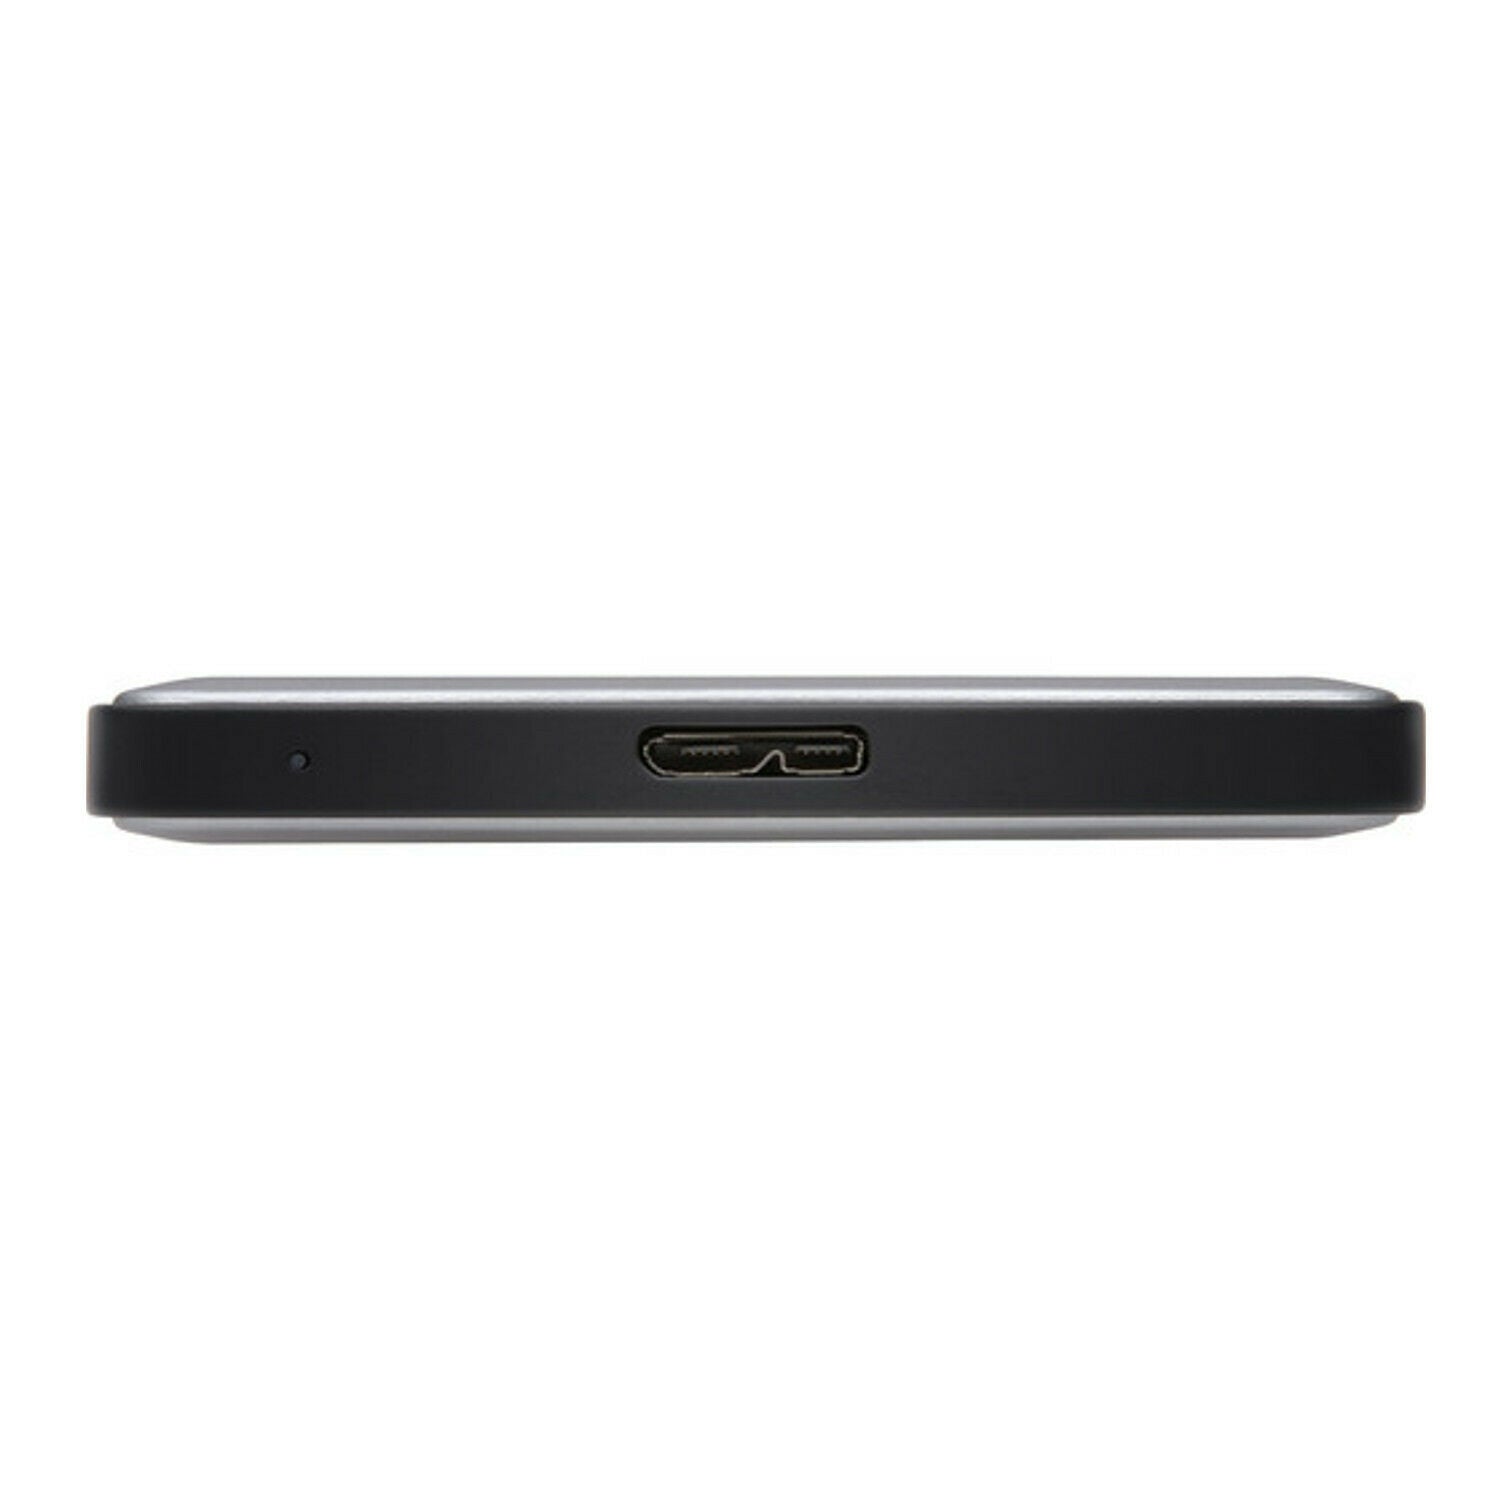 Touro S Portable External Hard Drive 500GB USB 3.0 for PC, Mac, Laptop - 0S03698